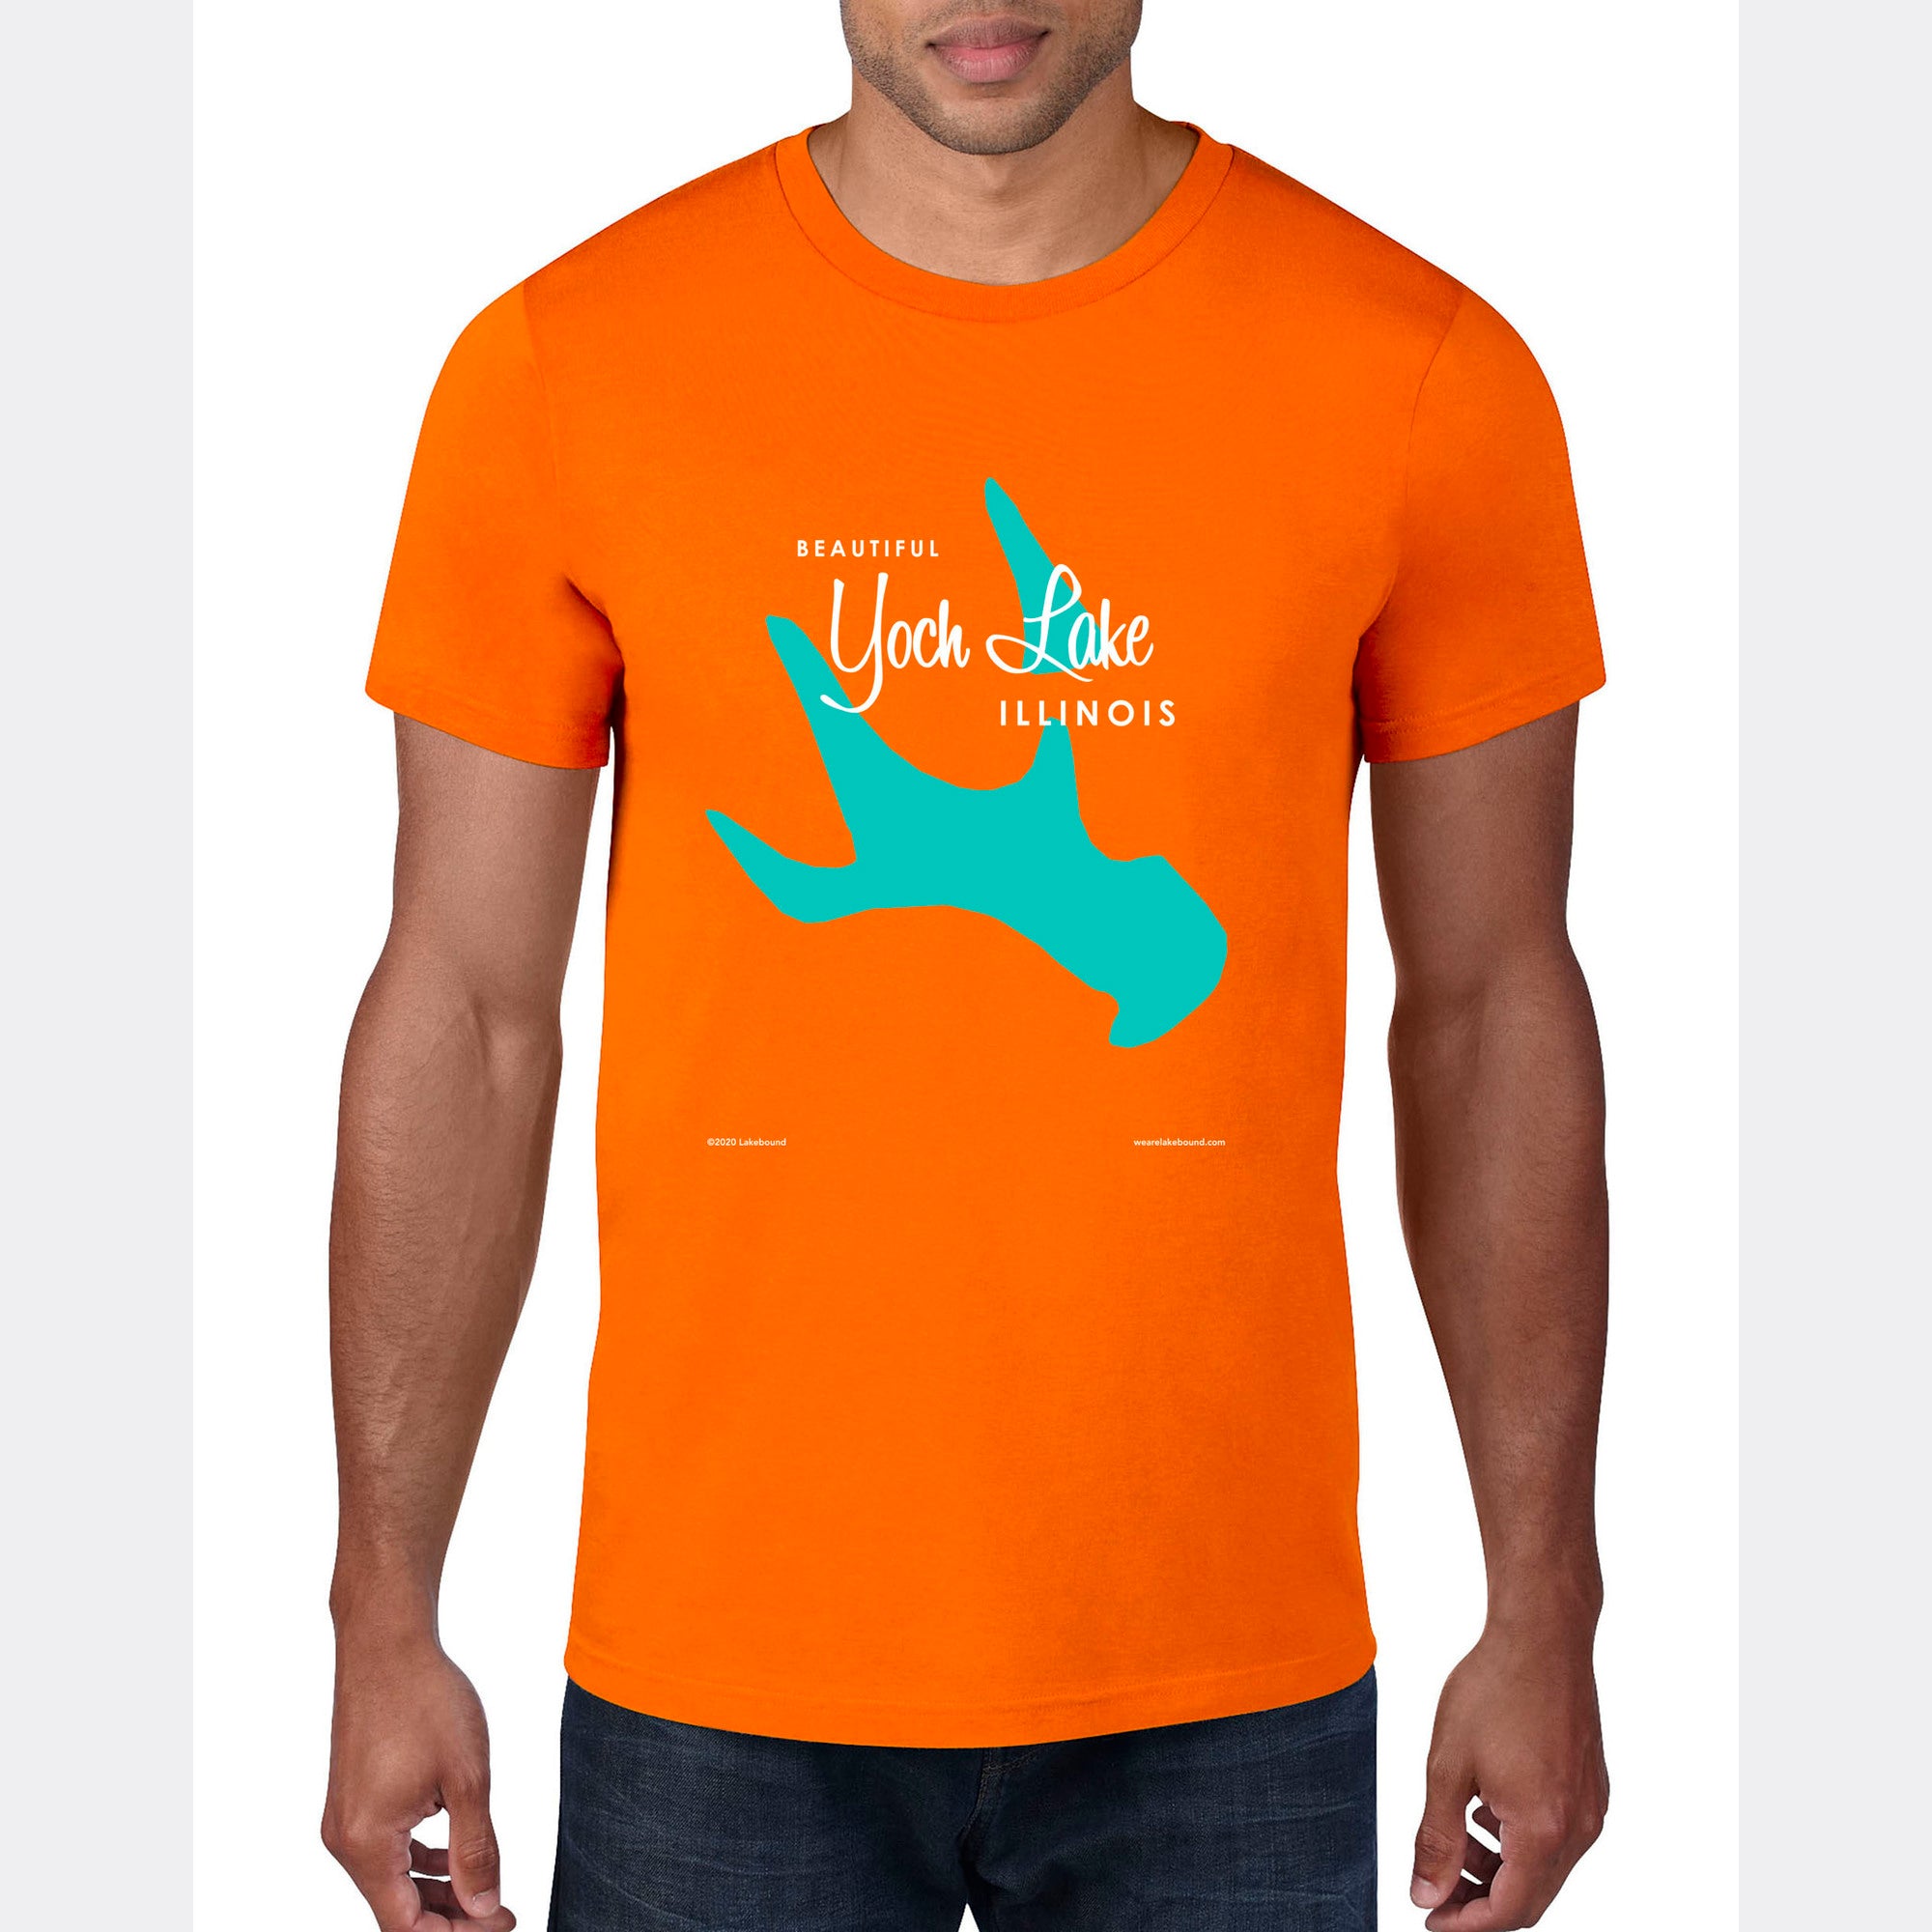 Yoch Lake Illinois, T-Shirt